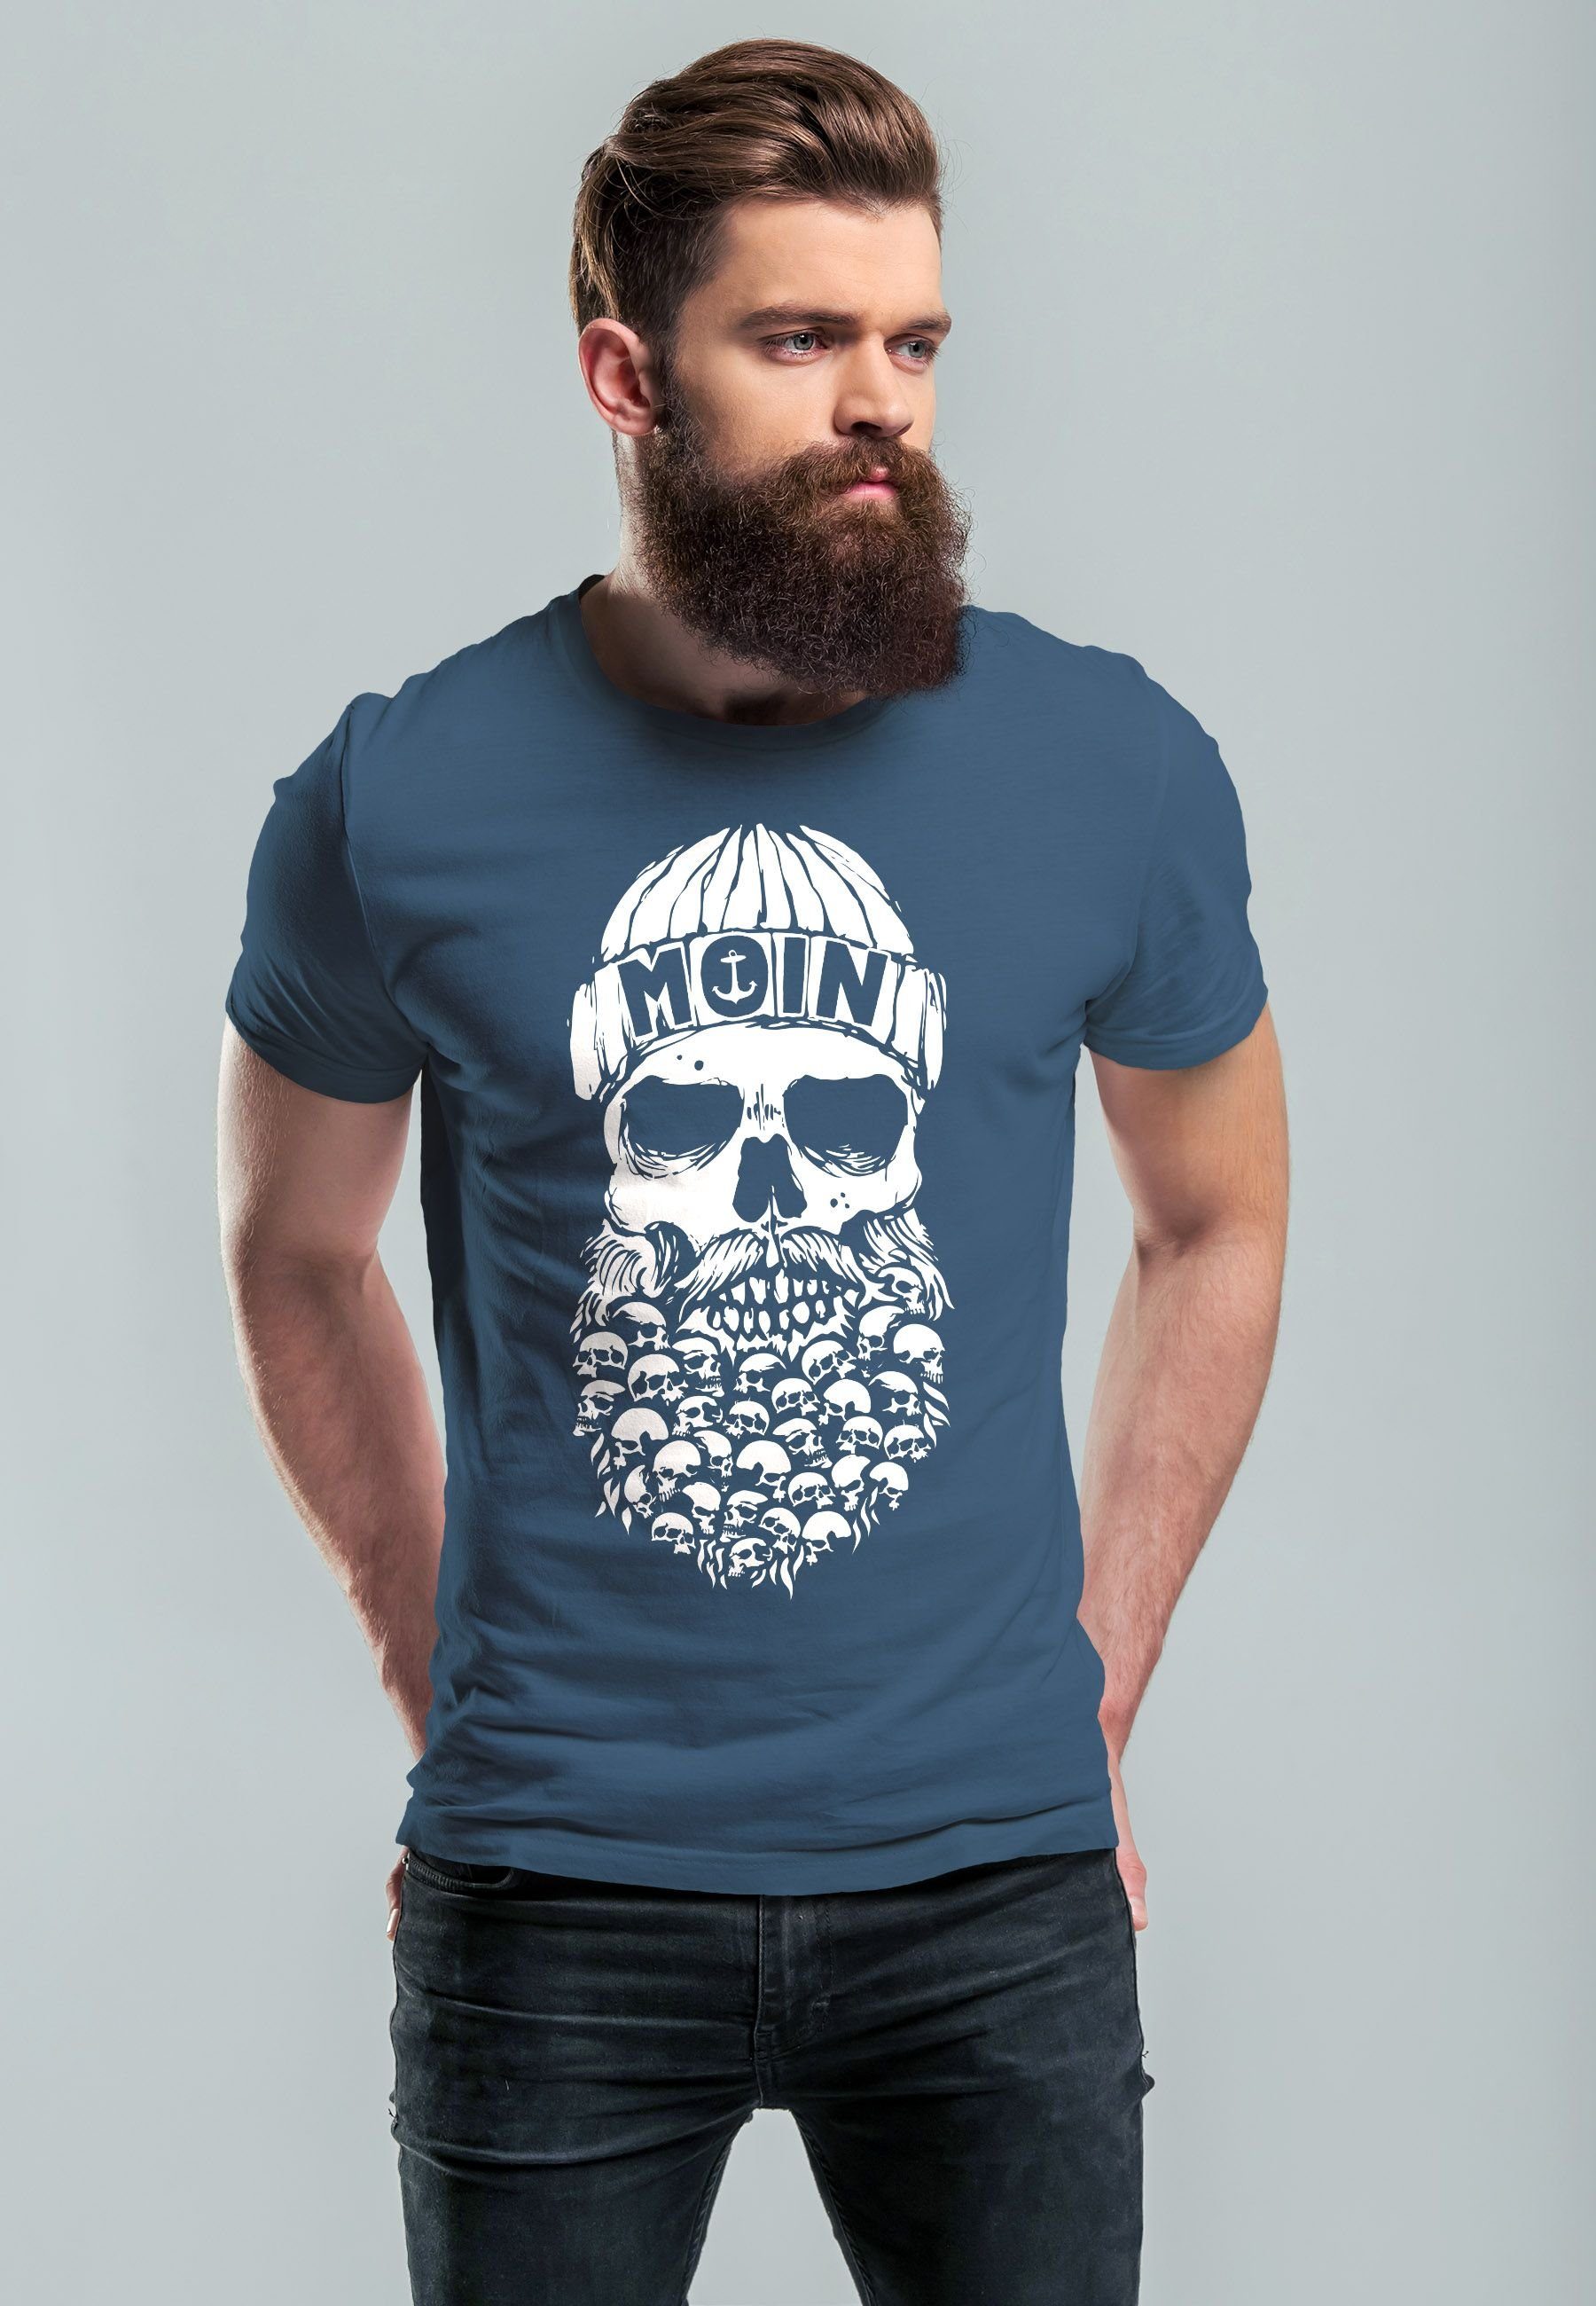 T-Shirt Nordisch Hamburg Moin Fas Print blue Dialekt Skull denim mit Anker Print-Shirt Totenkopf Neverless Herren